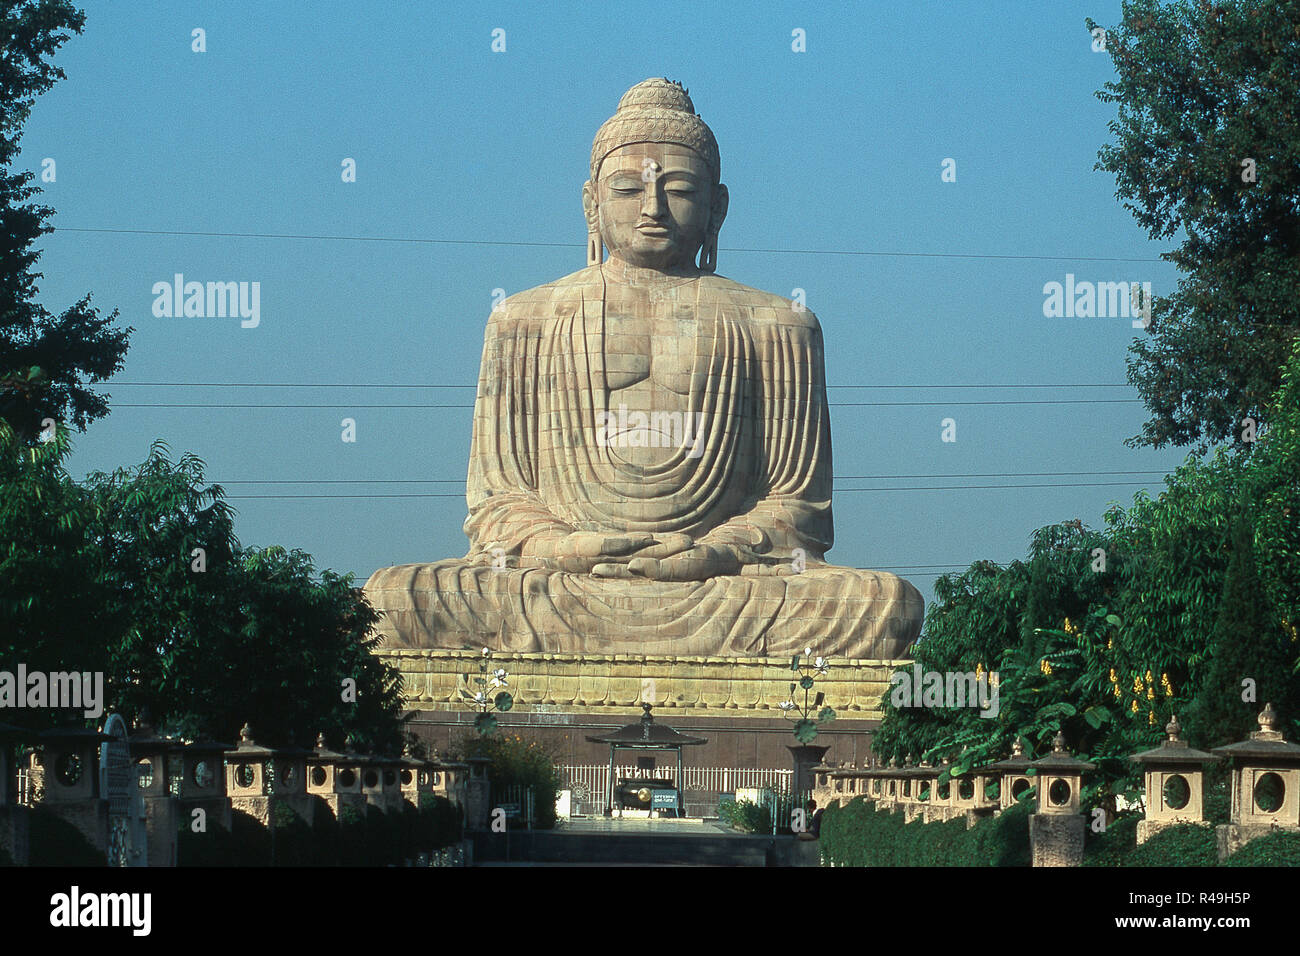 Der große Buddha Statue in Bodh Gaya, Bihar, Indien, Asien Stockfoto